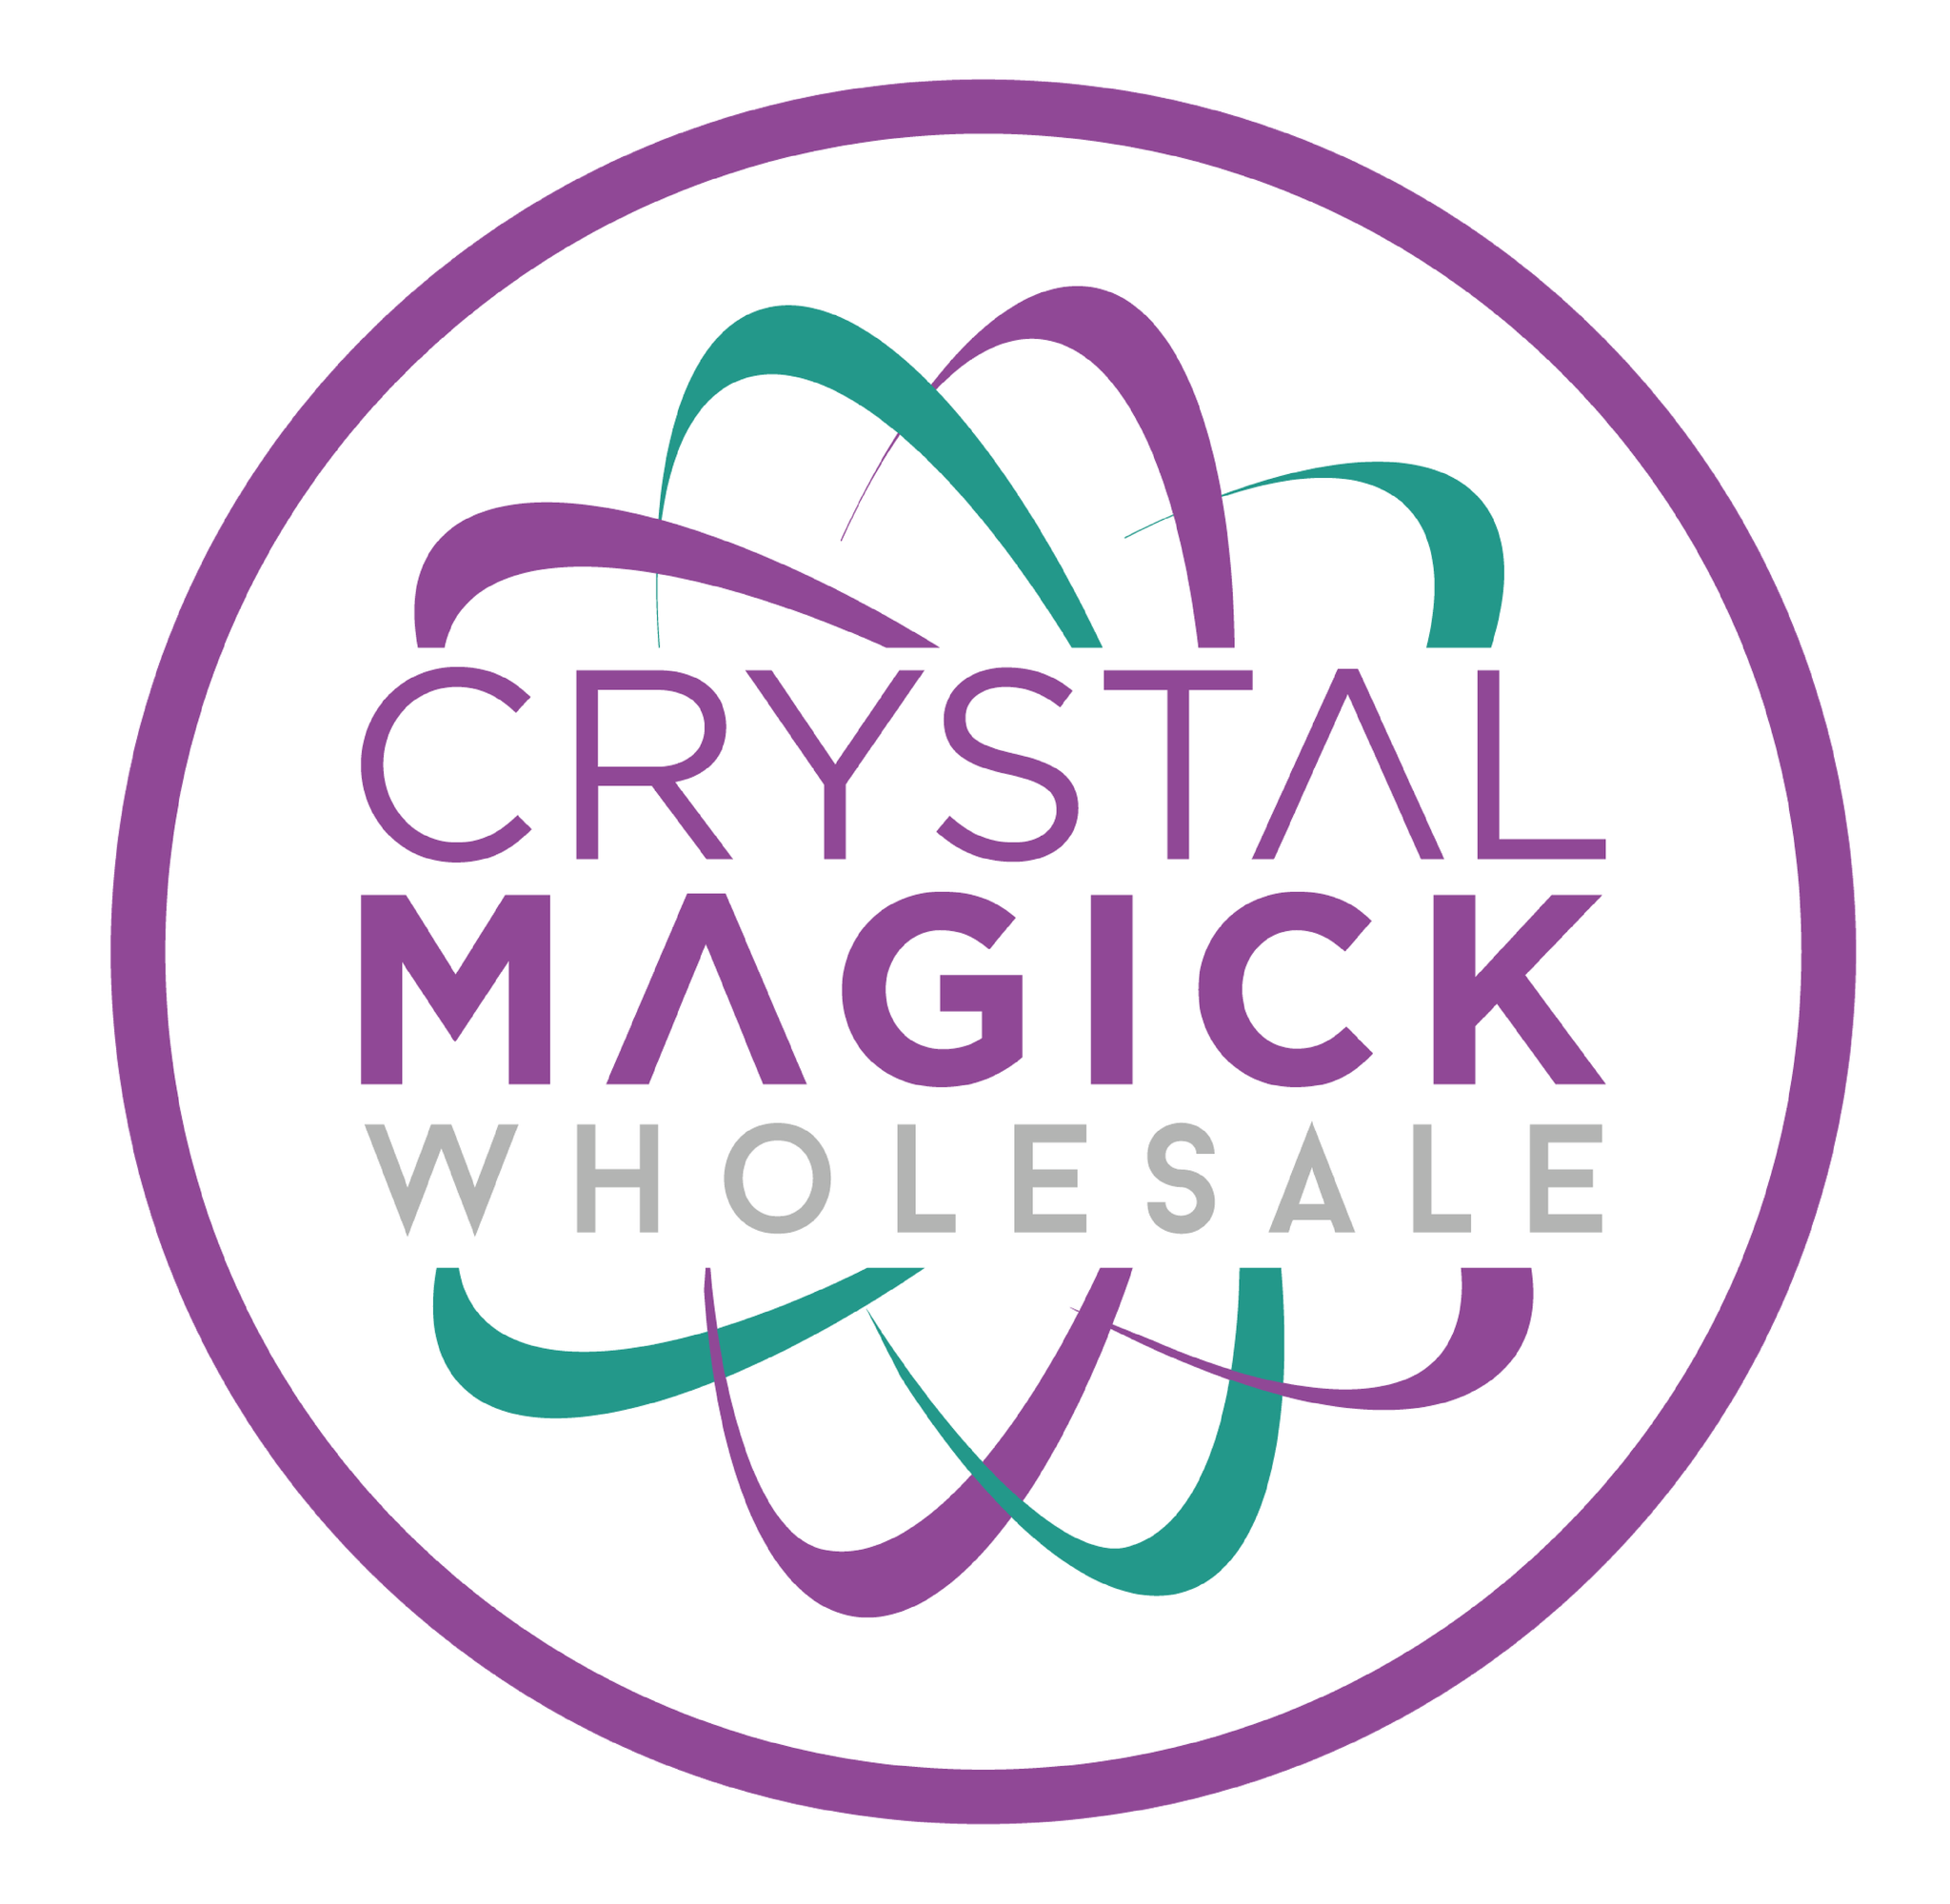 Crystal Magick Wholesale Ltd